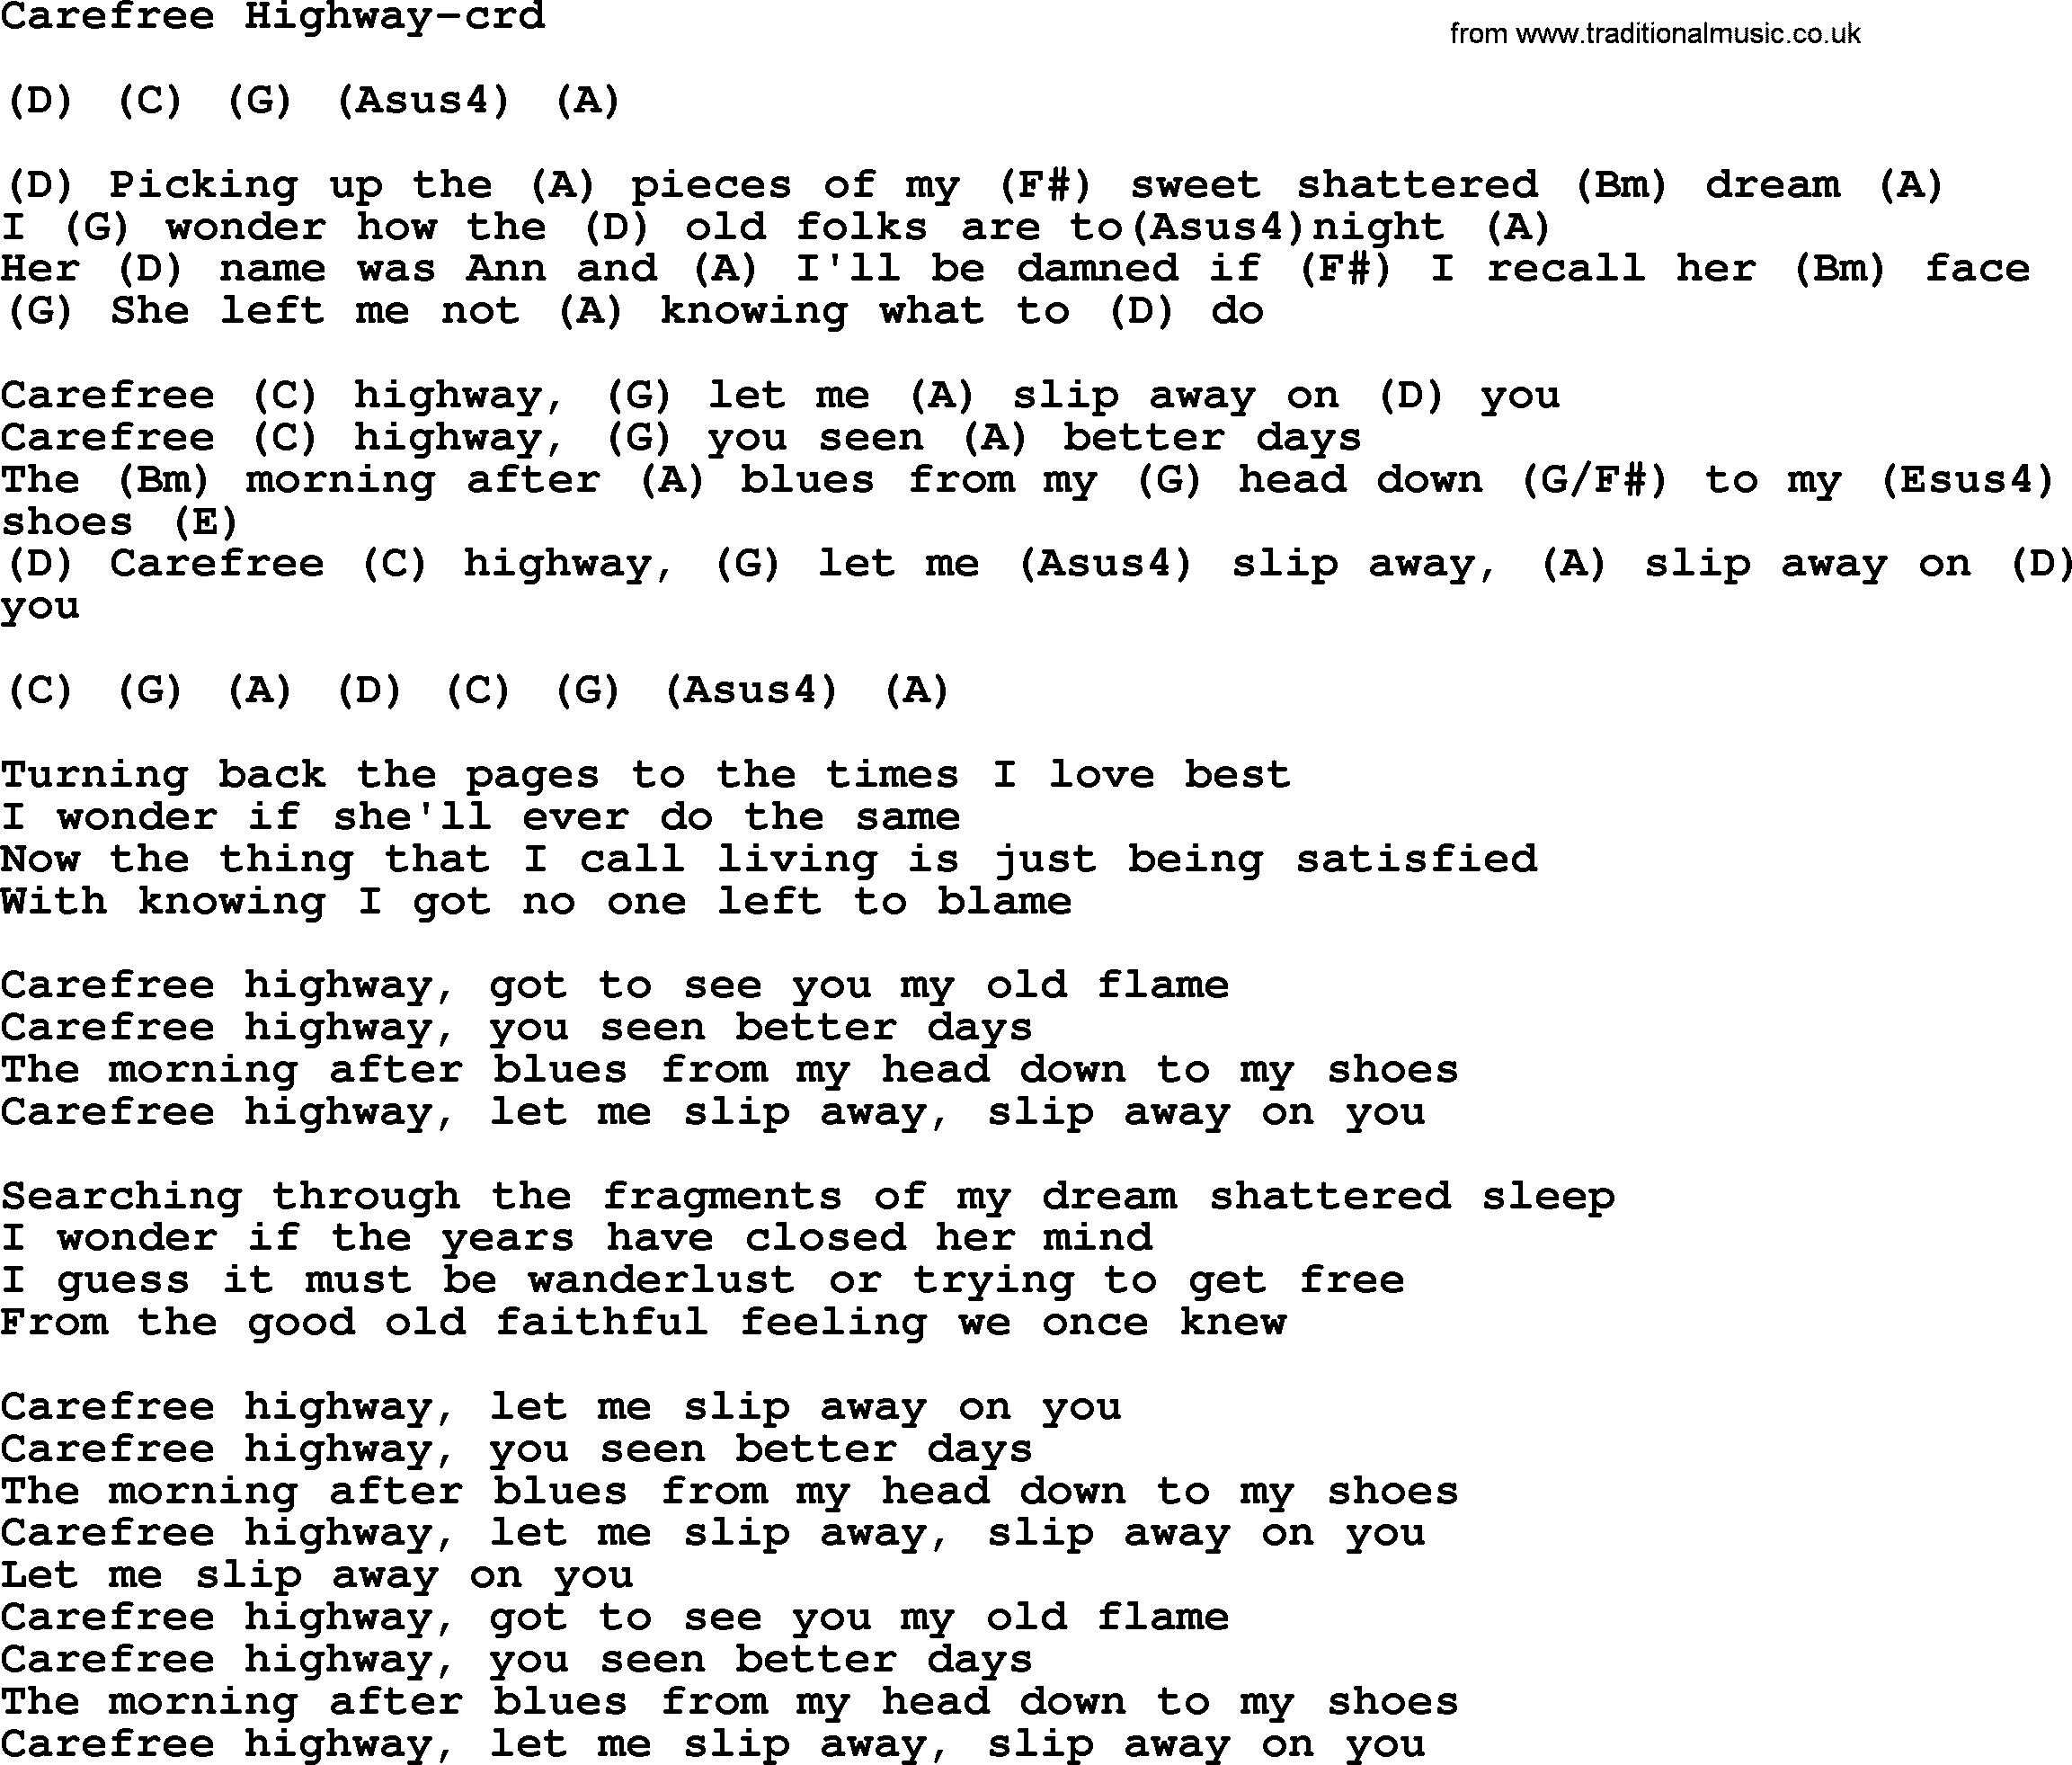 Gordon Lightfoot song Carefree Highway, lyrics and chords